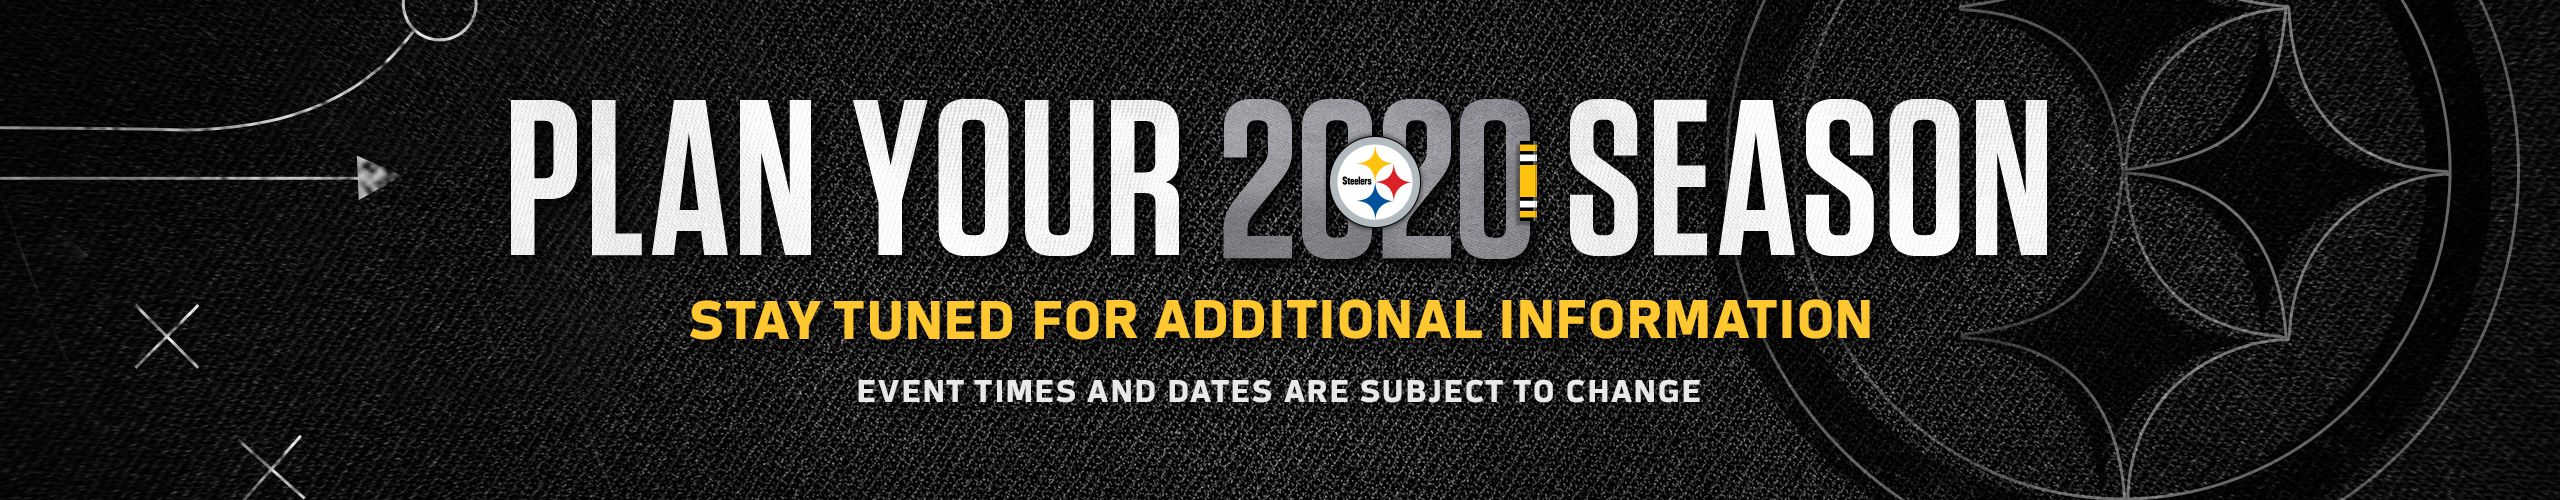 Steelers Events Calendar | Pittsburgh Steelers - Steelers.com